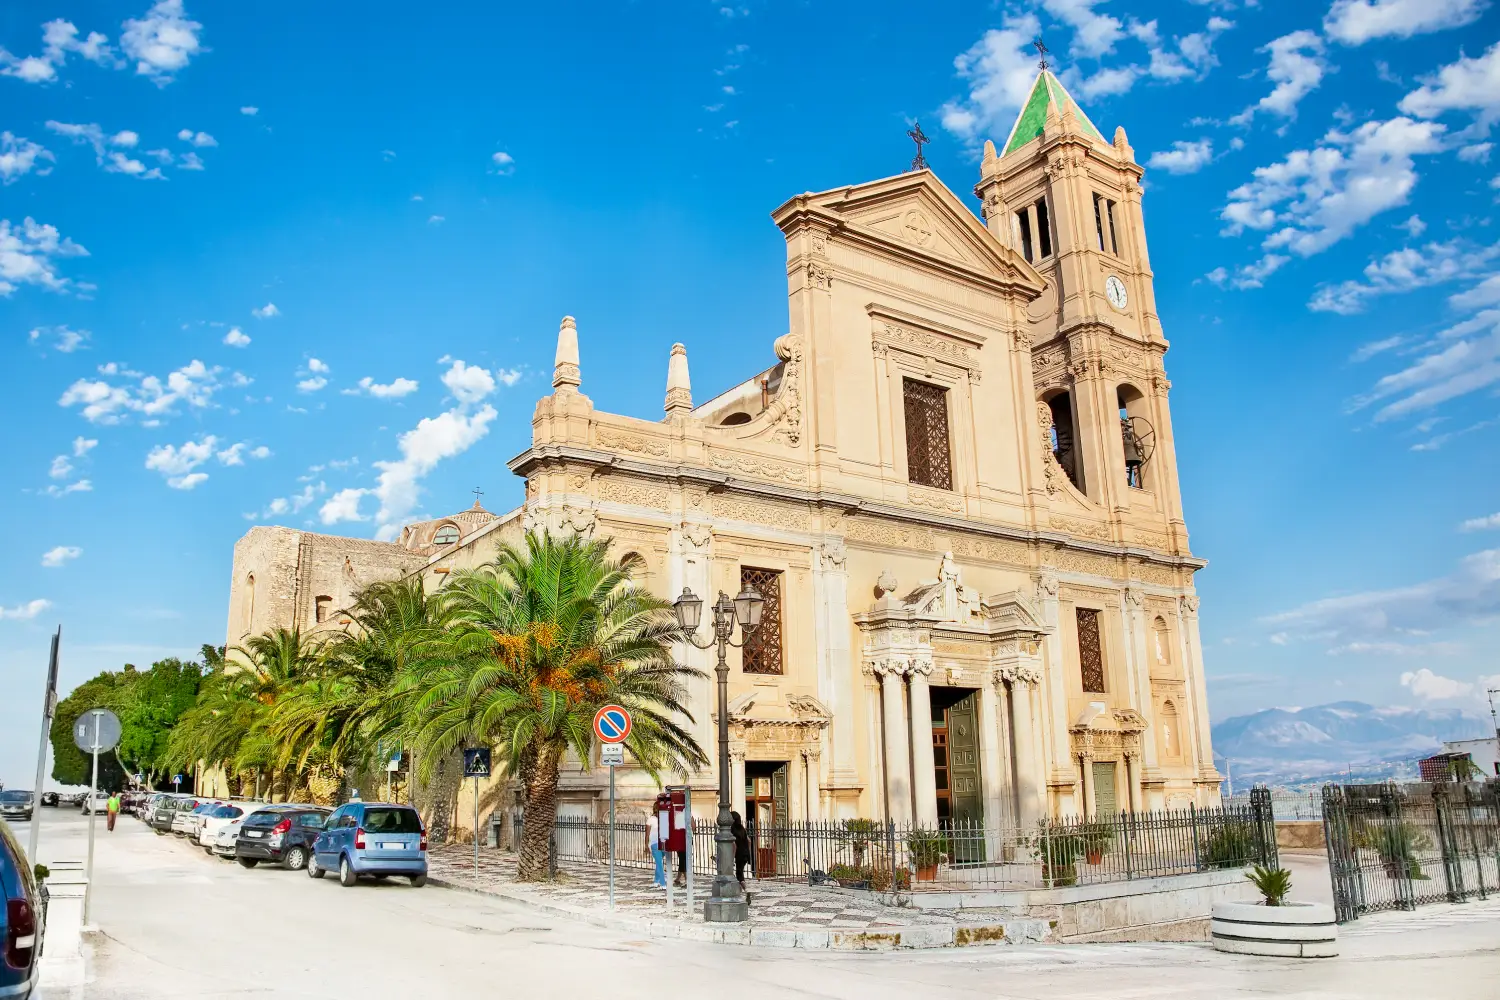 Parrocchia San Nicola Di Bari Kirche in Termini Imerese, Sizilien